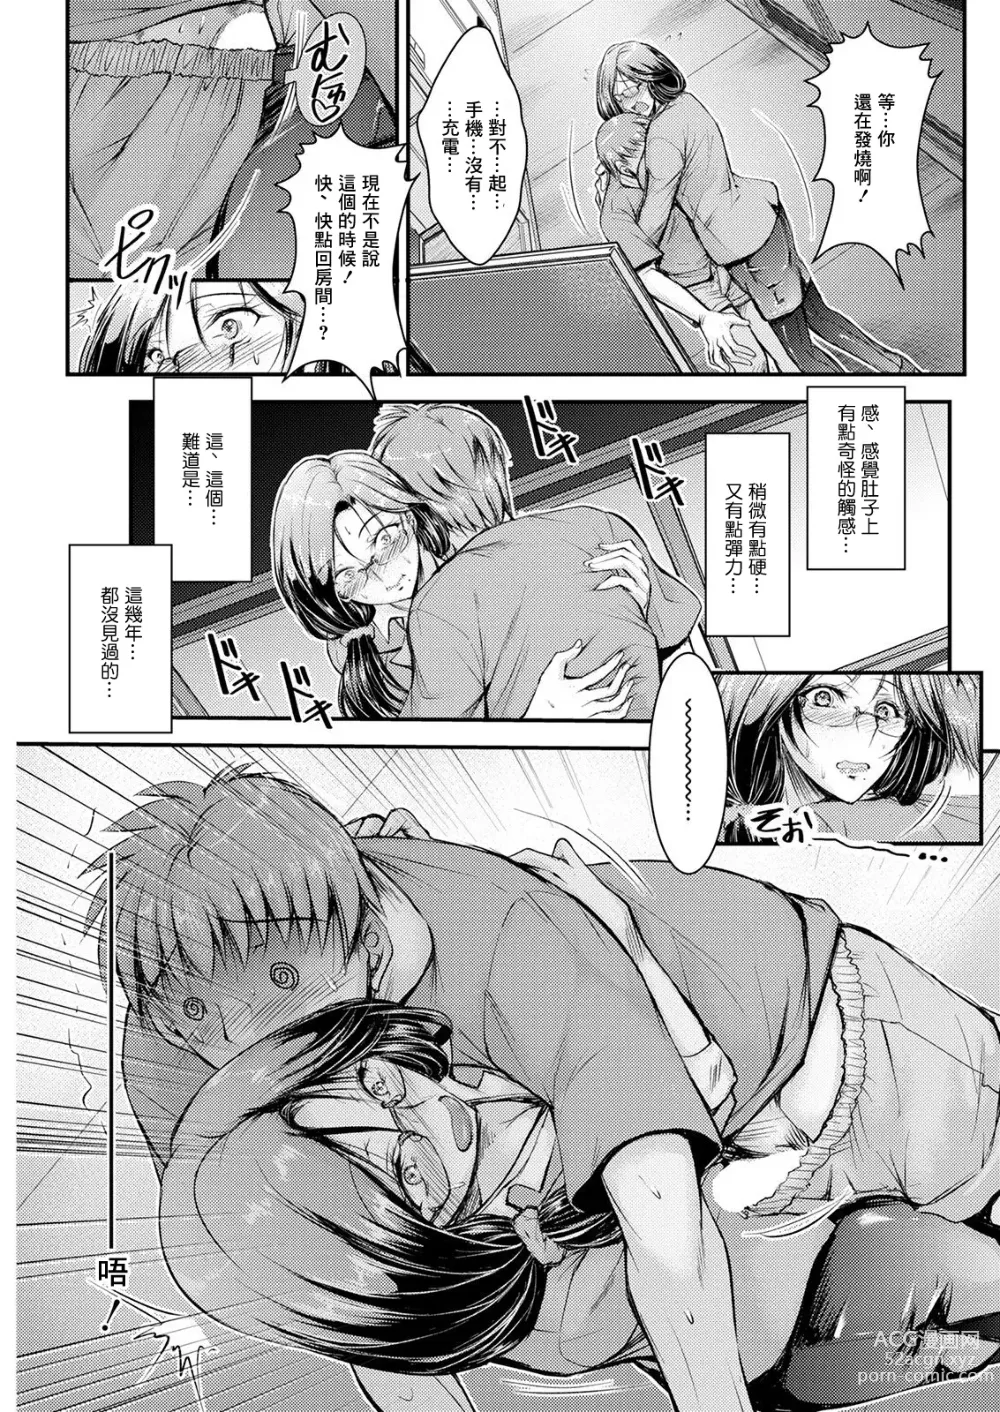 Page 5 of manga Shunin wa Dekiru Joushi